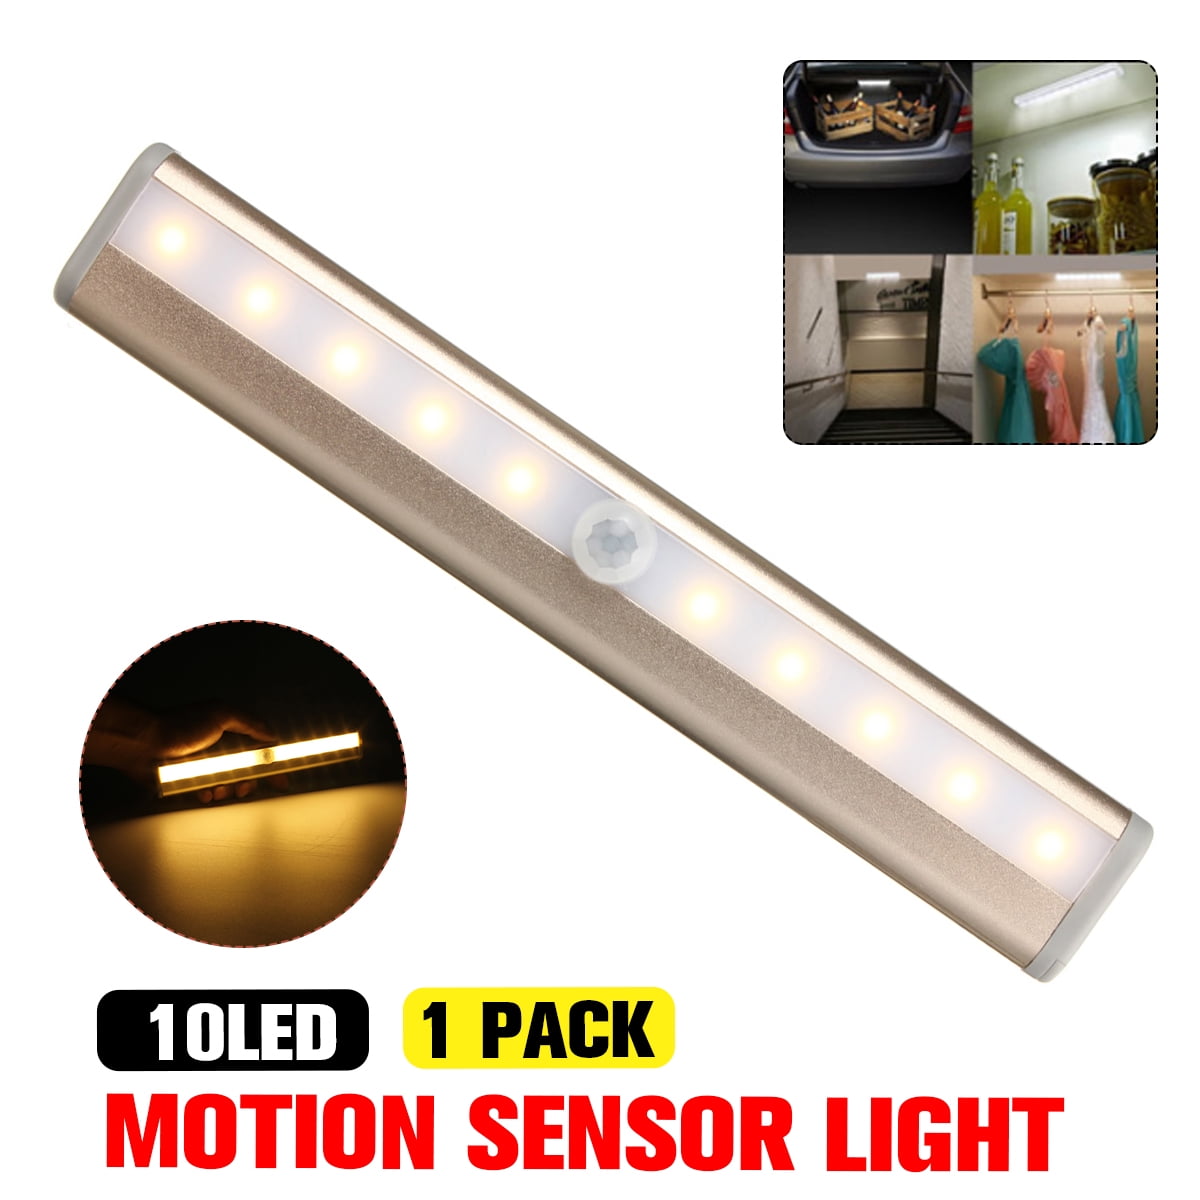 Details about   LED PIR Closet Light Motion Sensor Rechargeable USB Wireless Lamp Strip V0A4